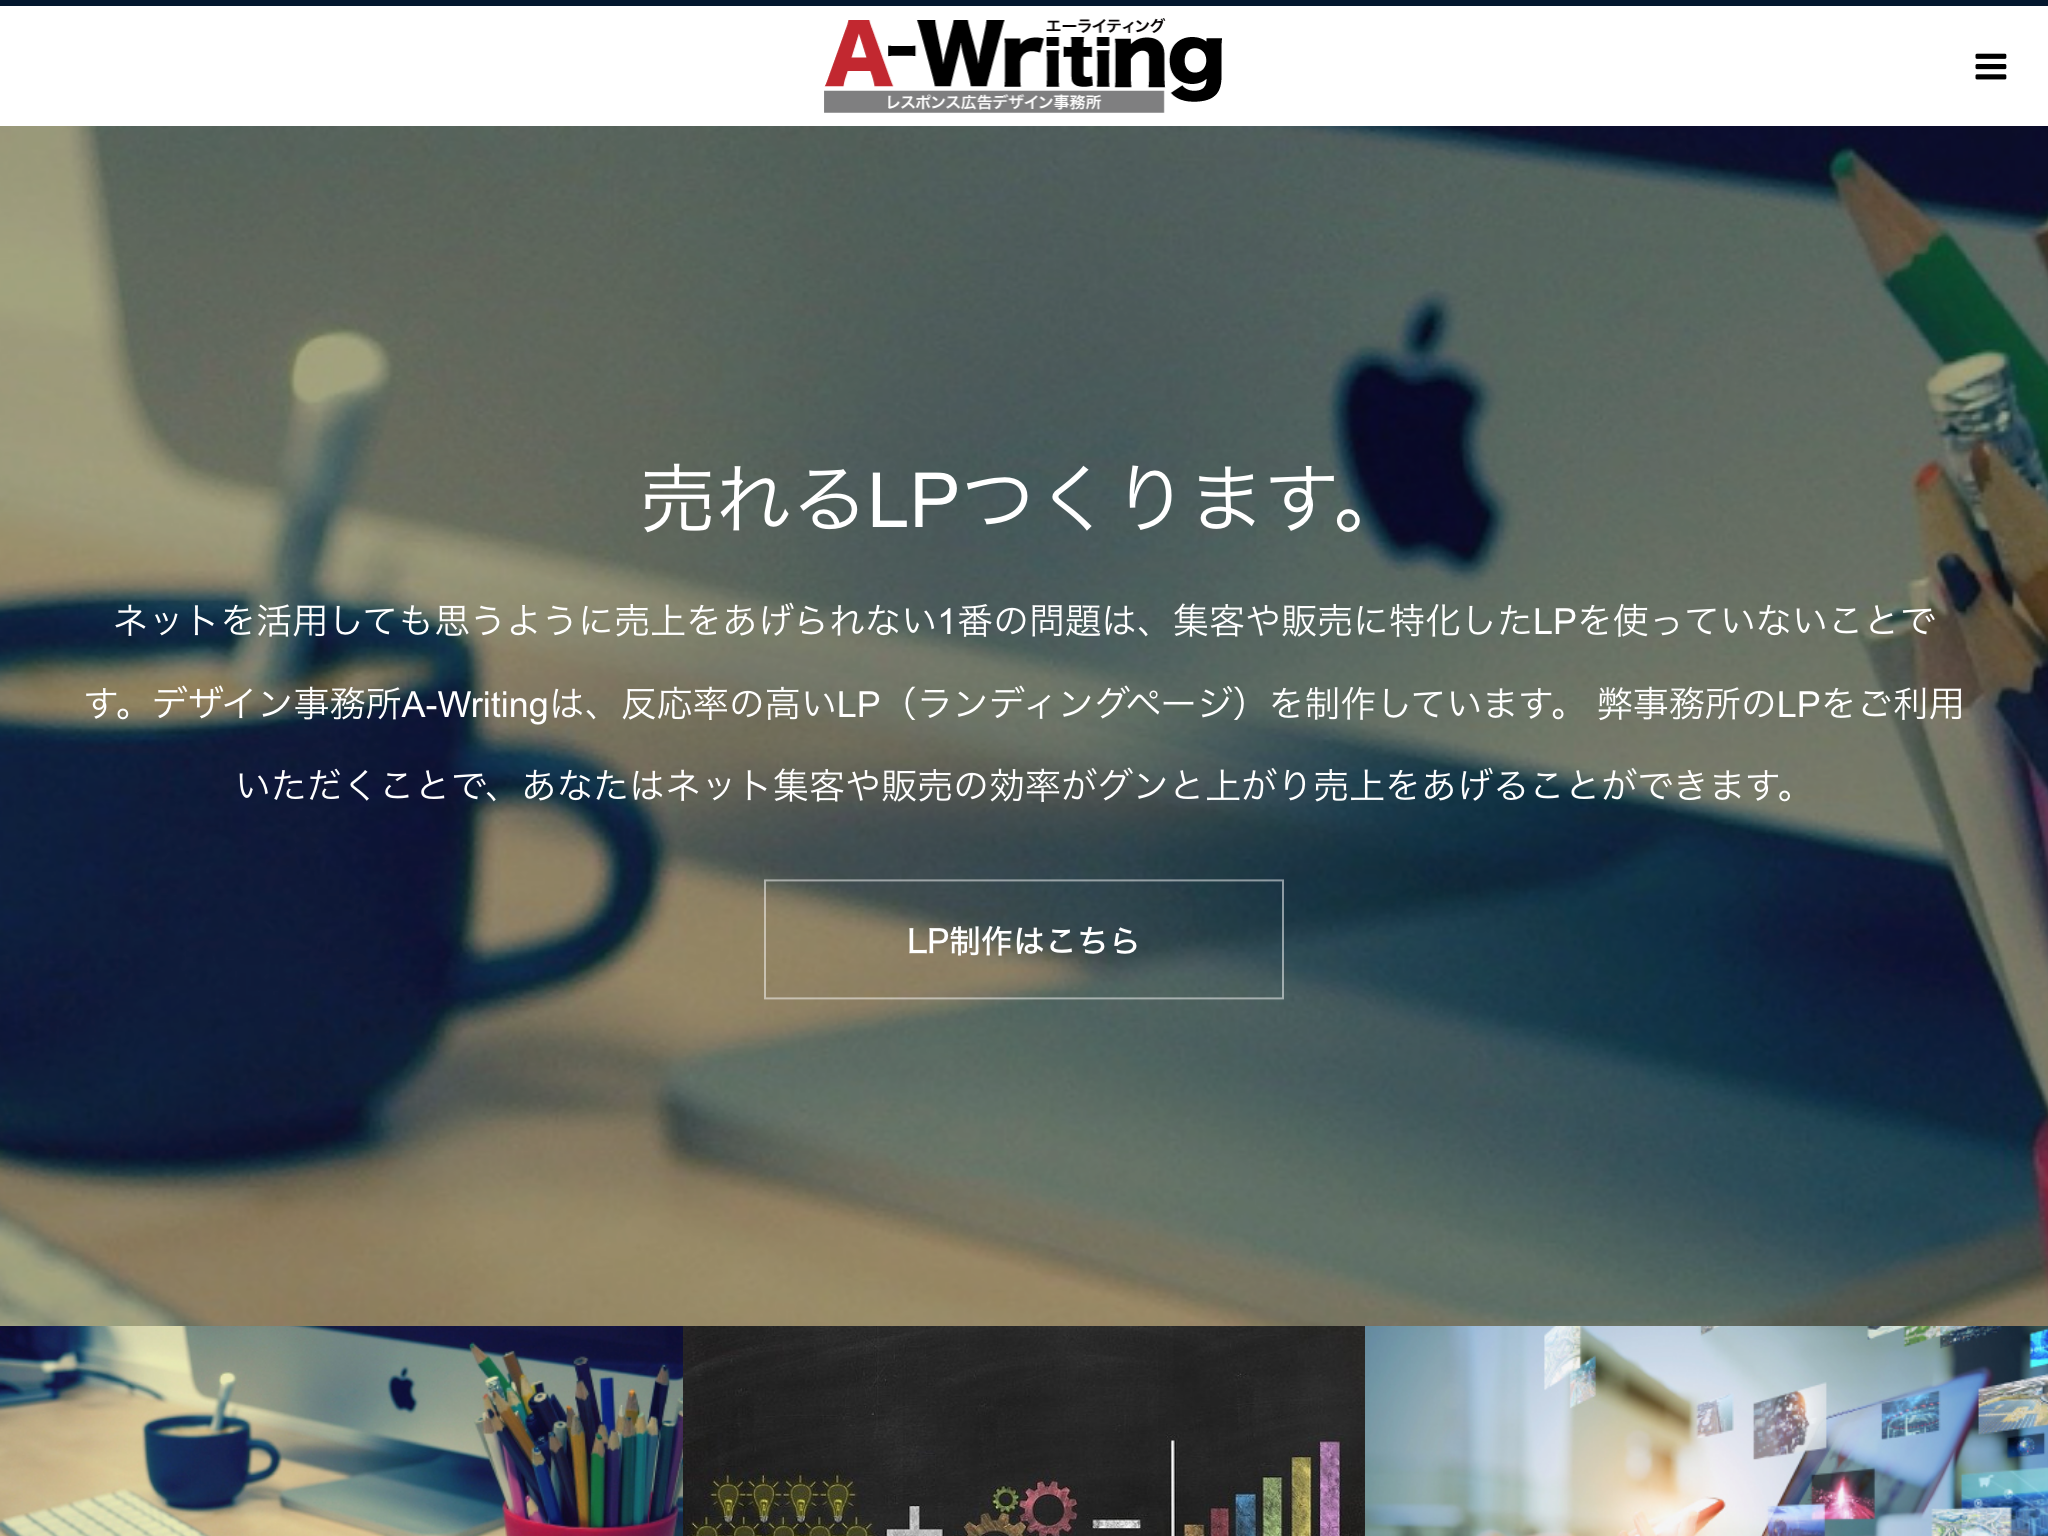 A-Writing